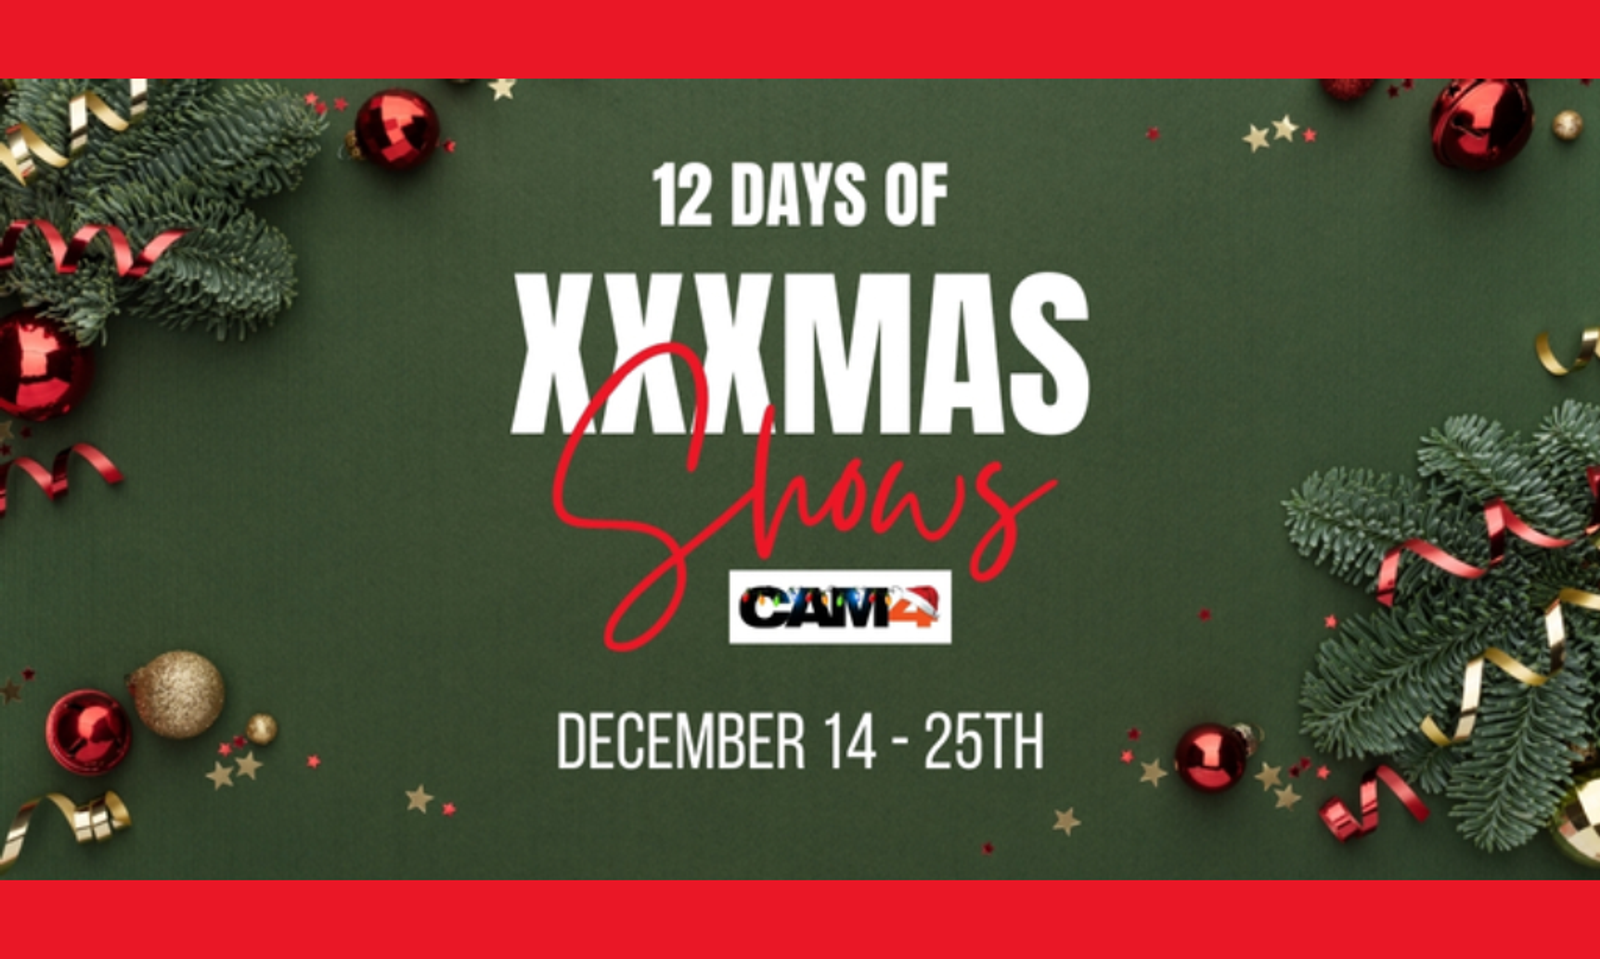 CAM4 and FAN5 Announce '12 Days of XXXmas' Celebration